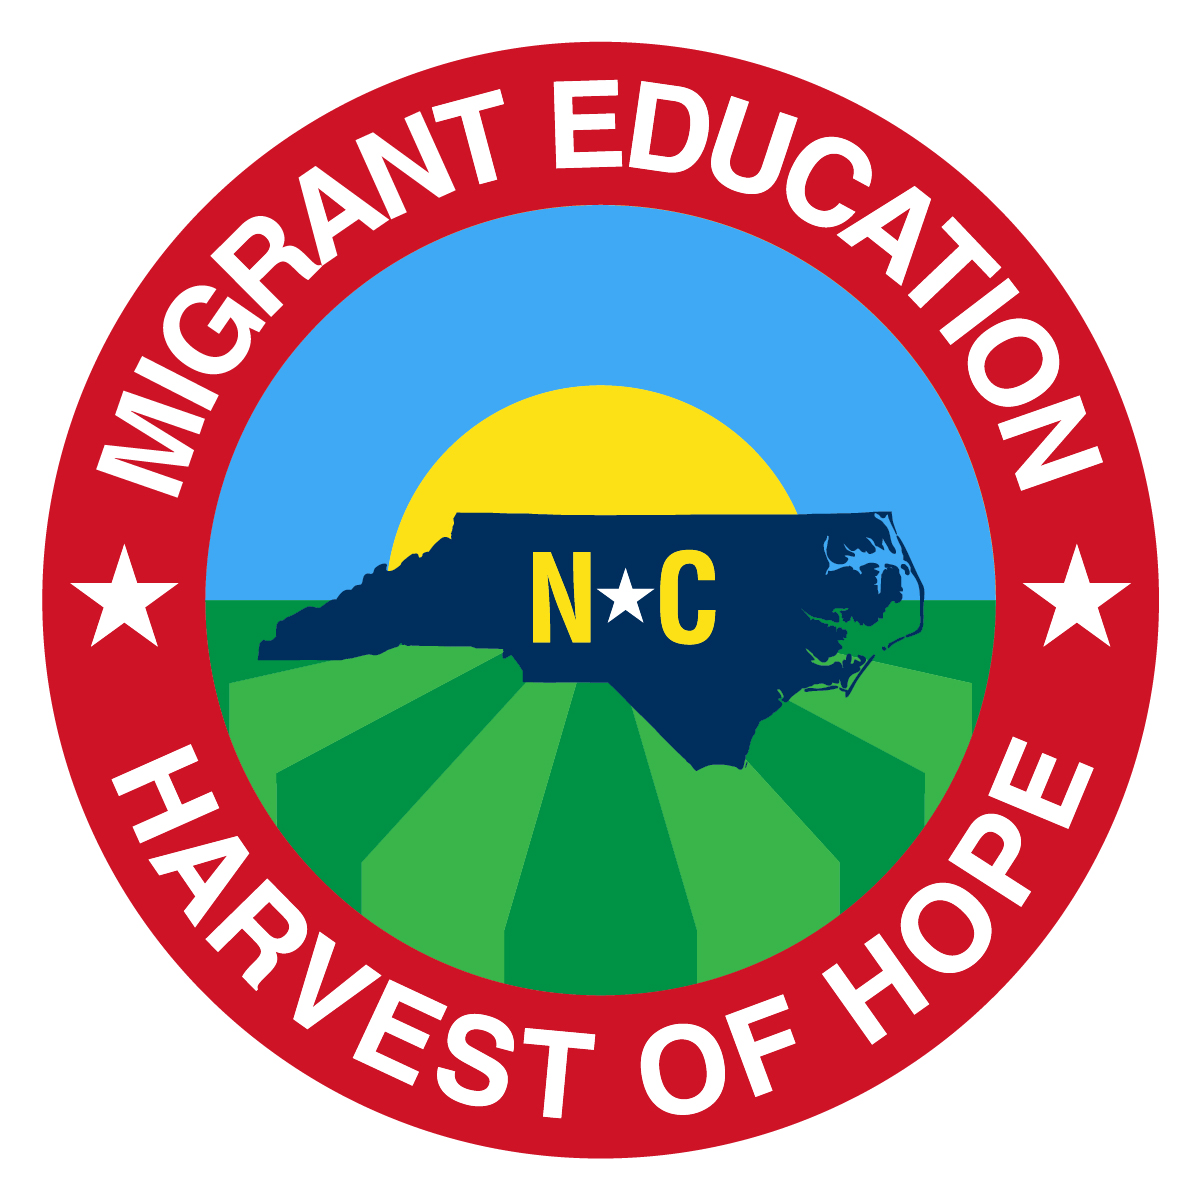 NC, Migrant Education, Harvest of Hope